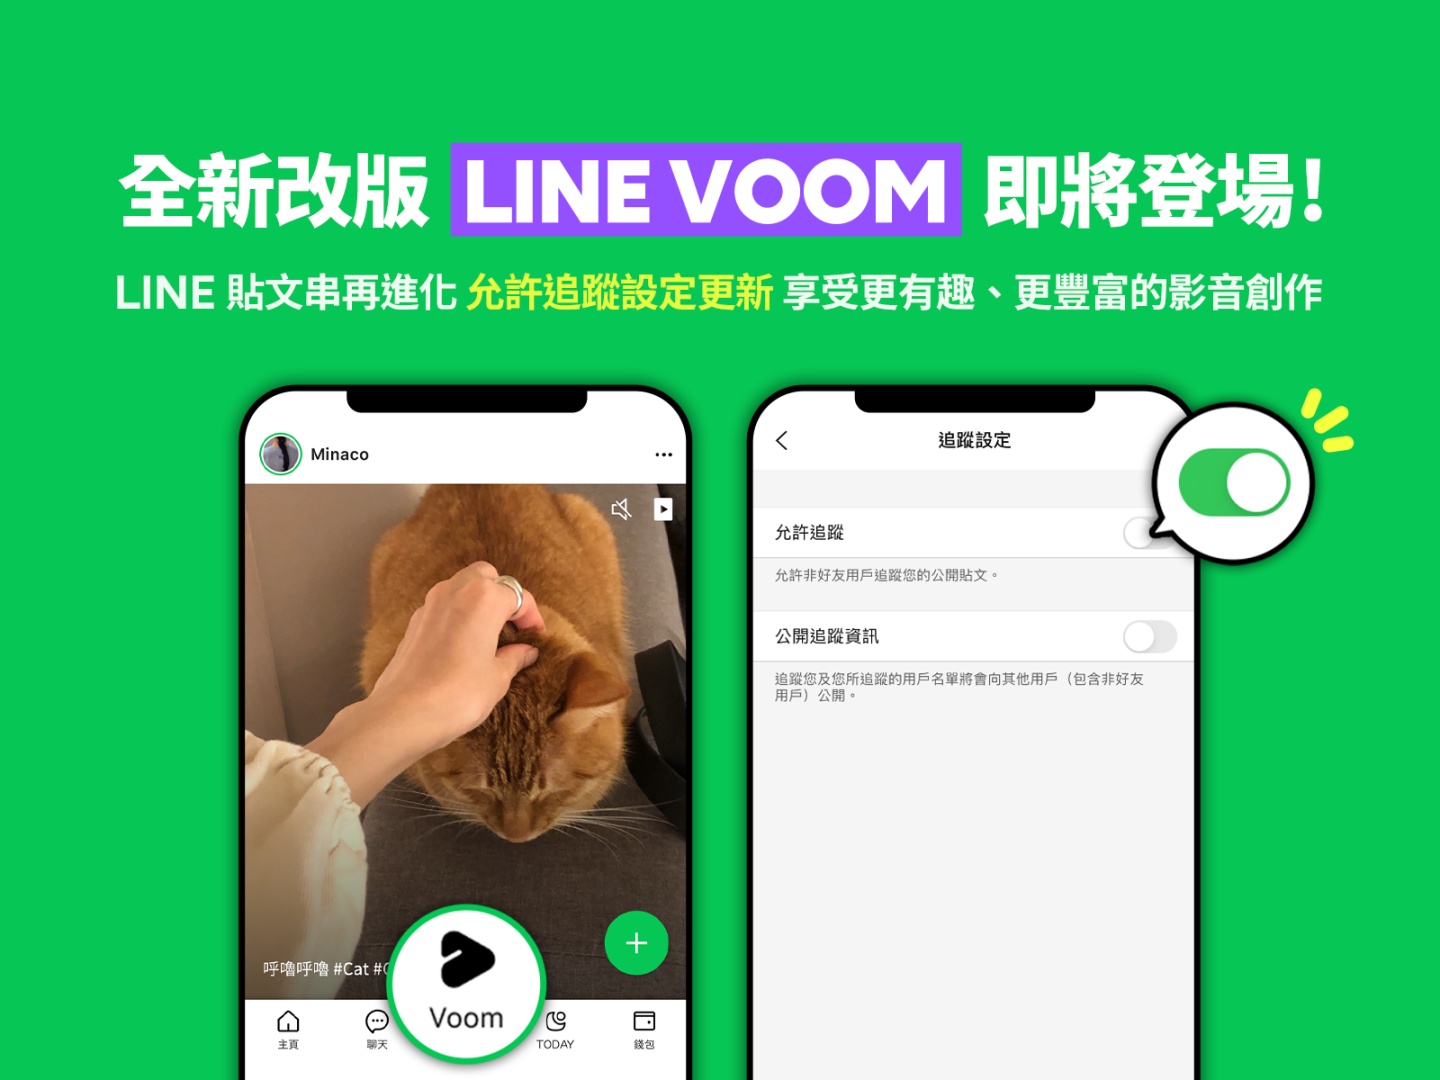 LINE 貼文串掰掰！將升級為全新短影音平台『 LINE VOOM 』，預計在年底前登場